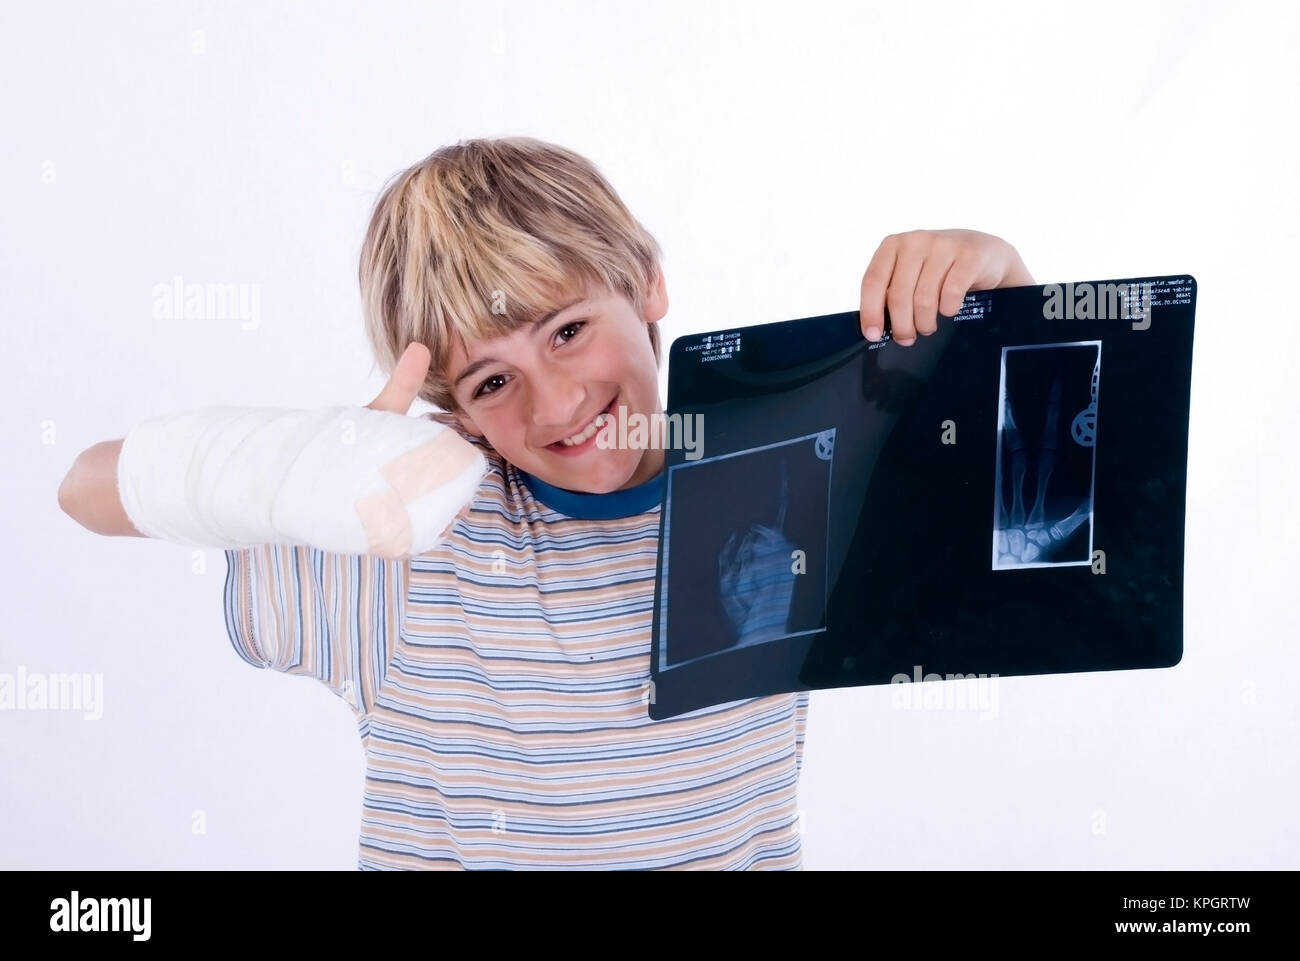 Junge, 11, mit Gipshand und Roentgenaufnahme - boy with arm in plaster and x-ray Stock Photo